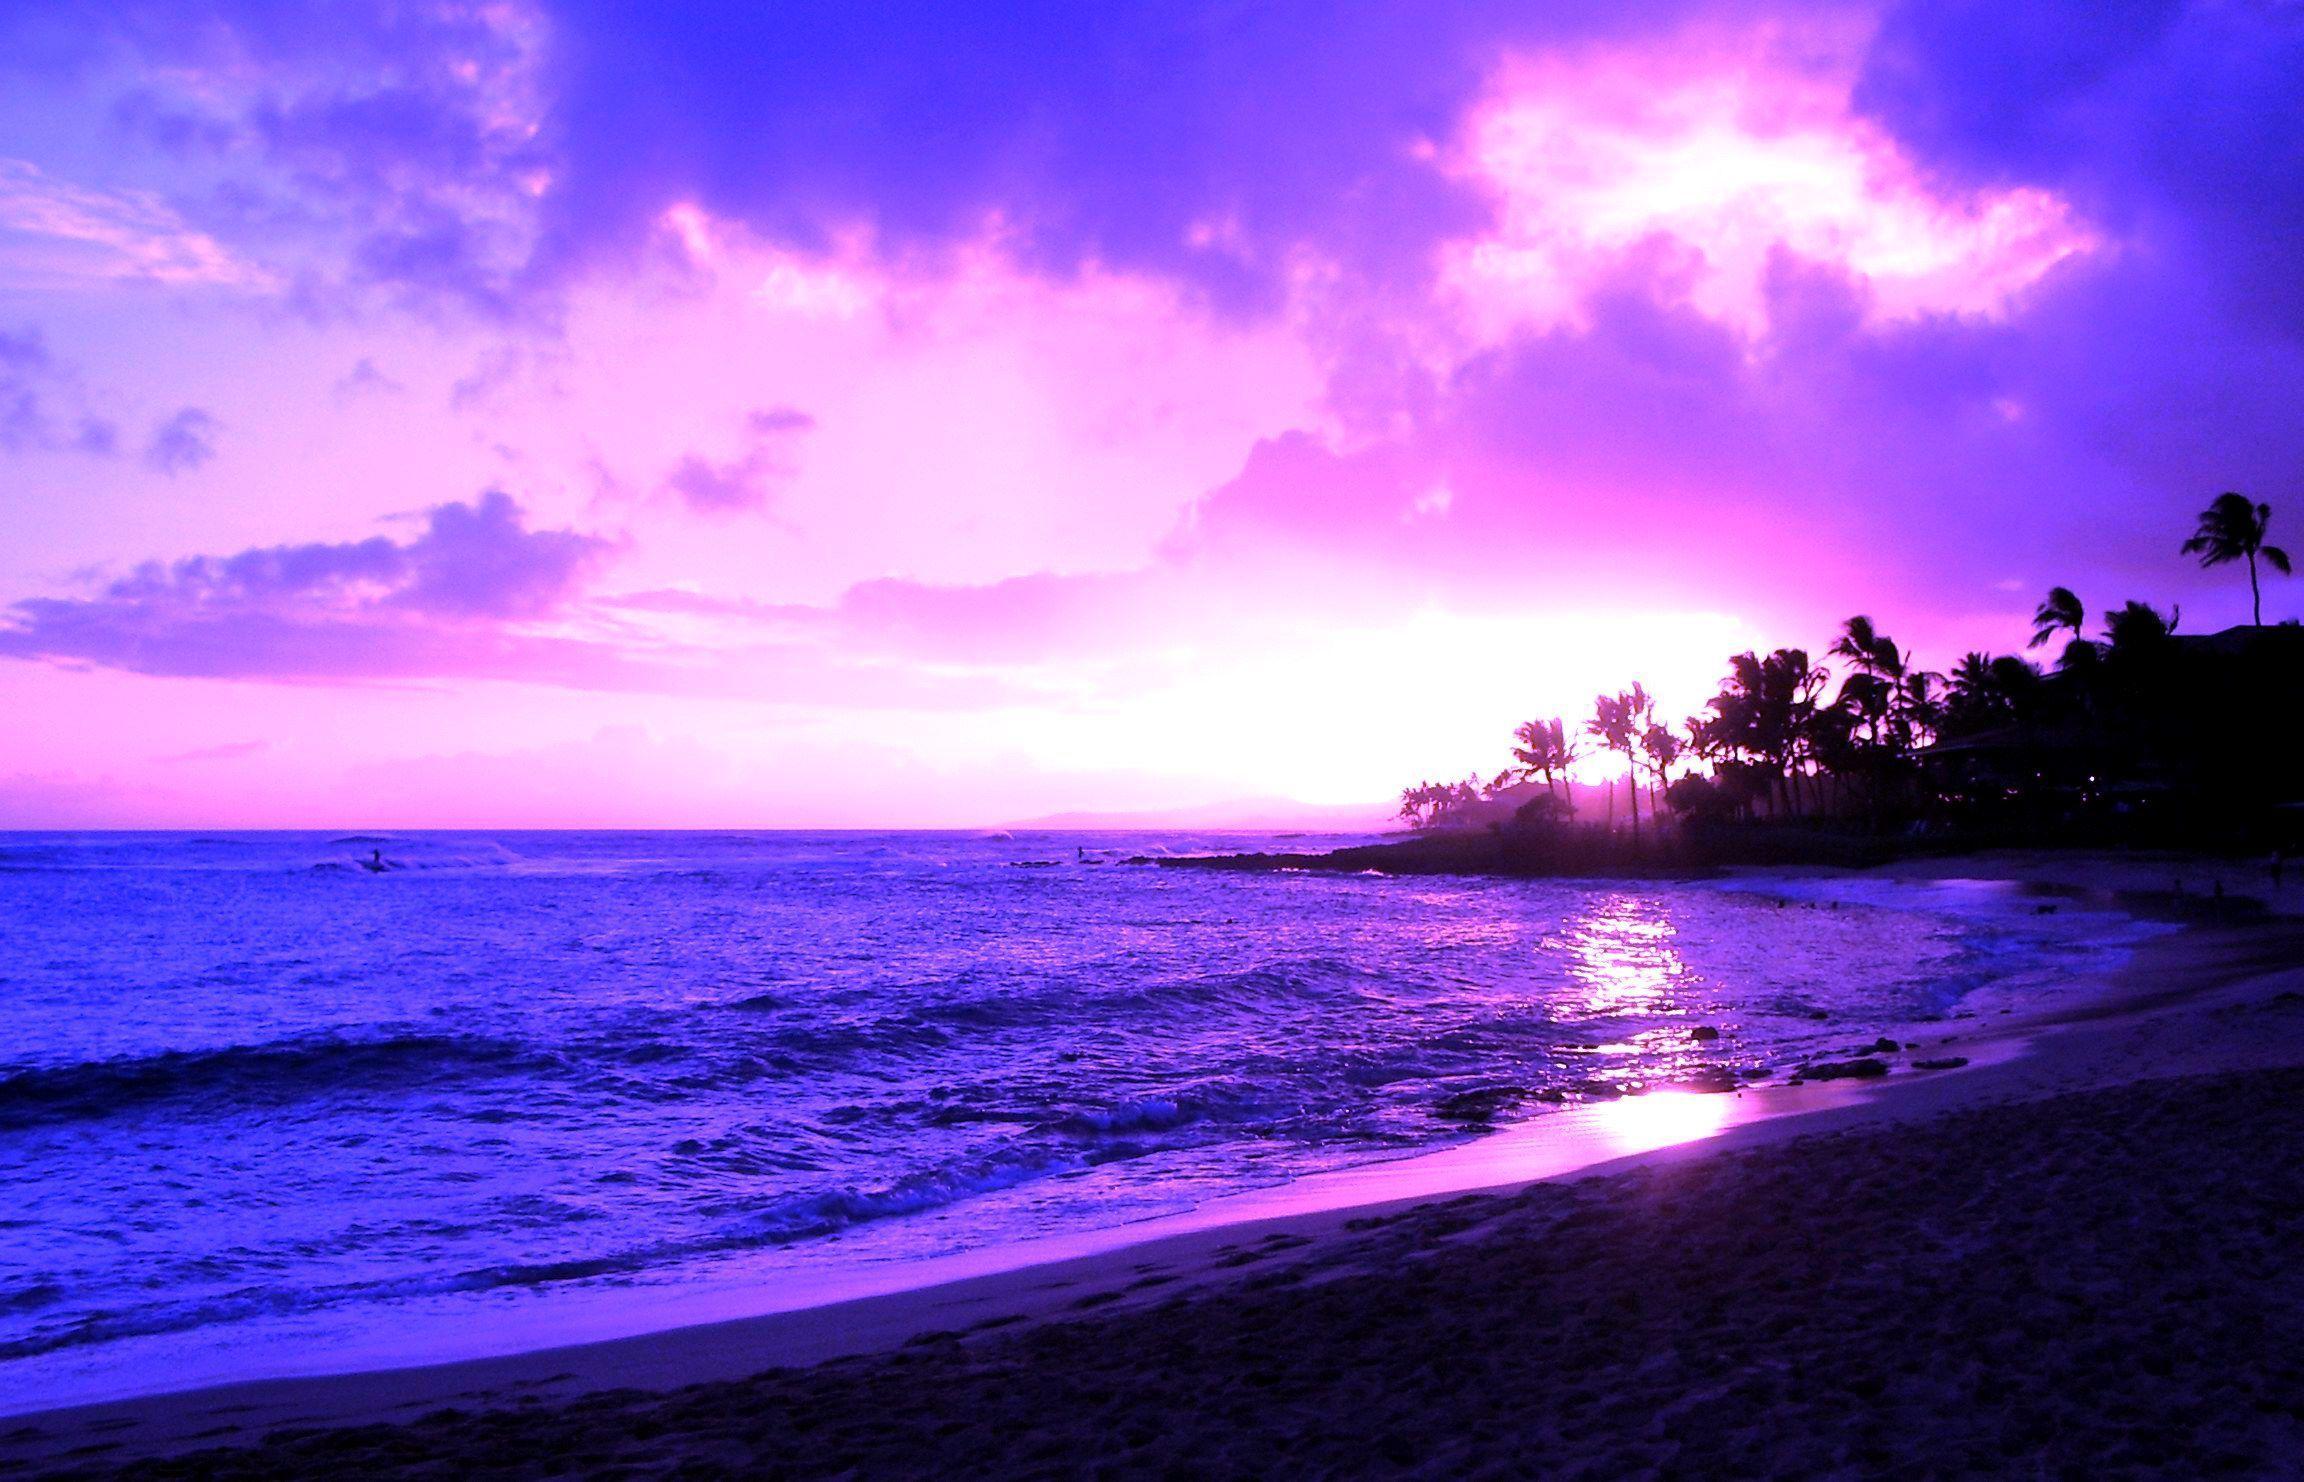 sunset images purple beach hd desktop wallpapers 4k hd on purple beach sunset wallpapers